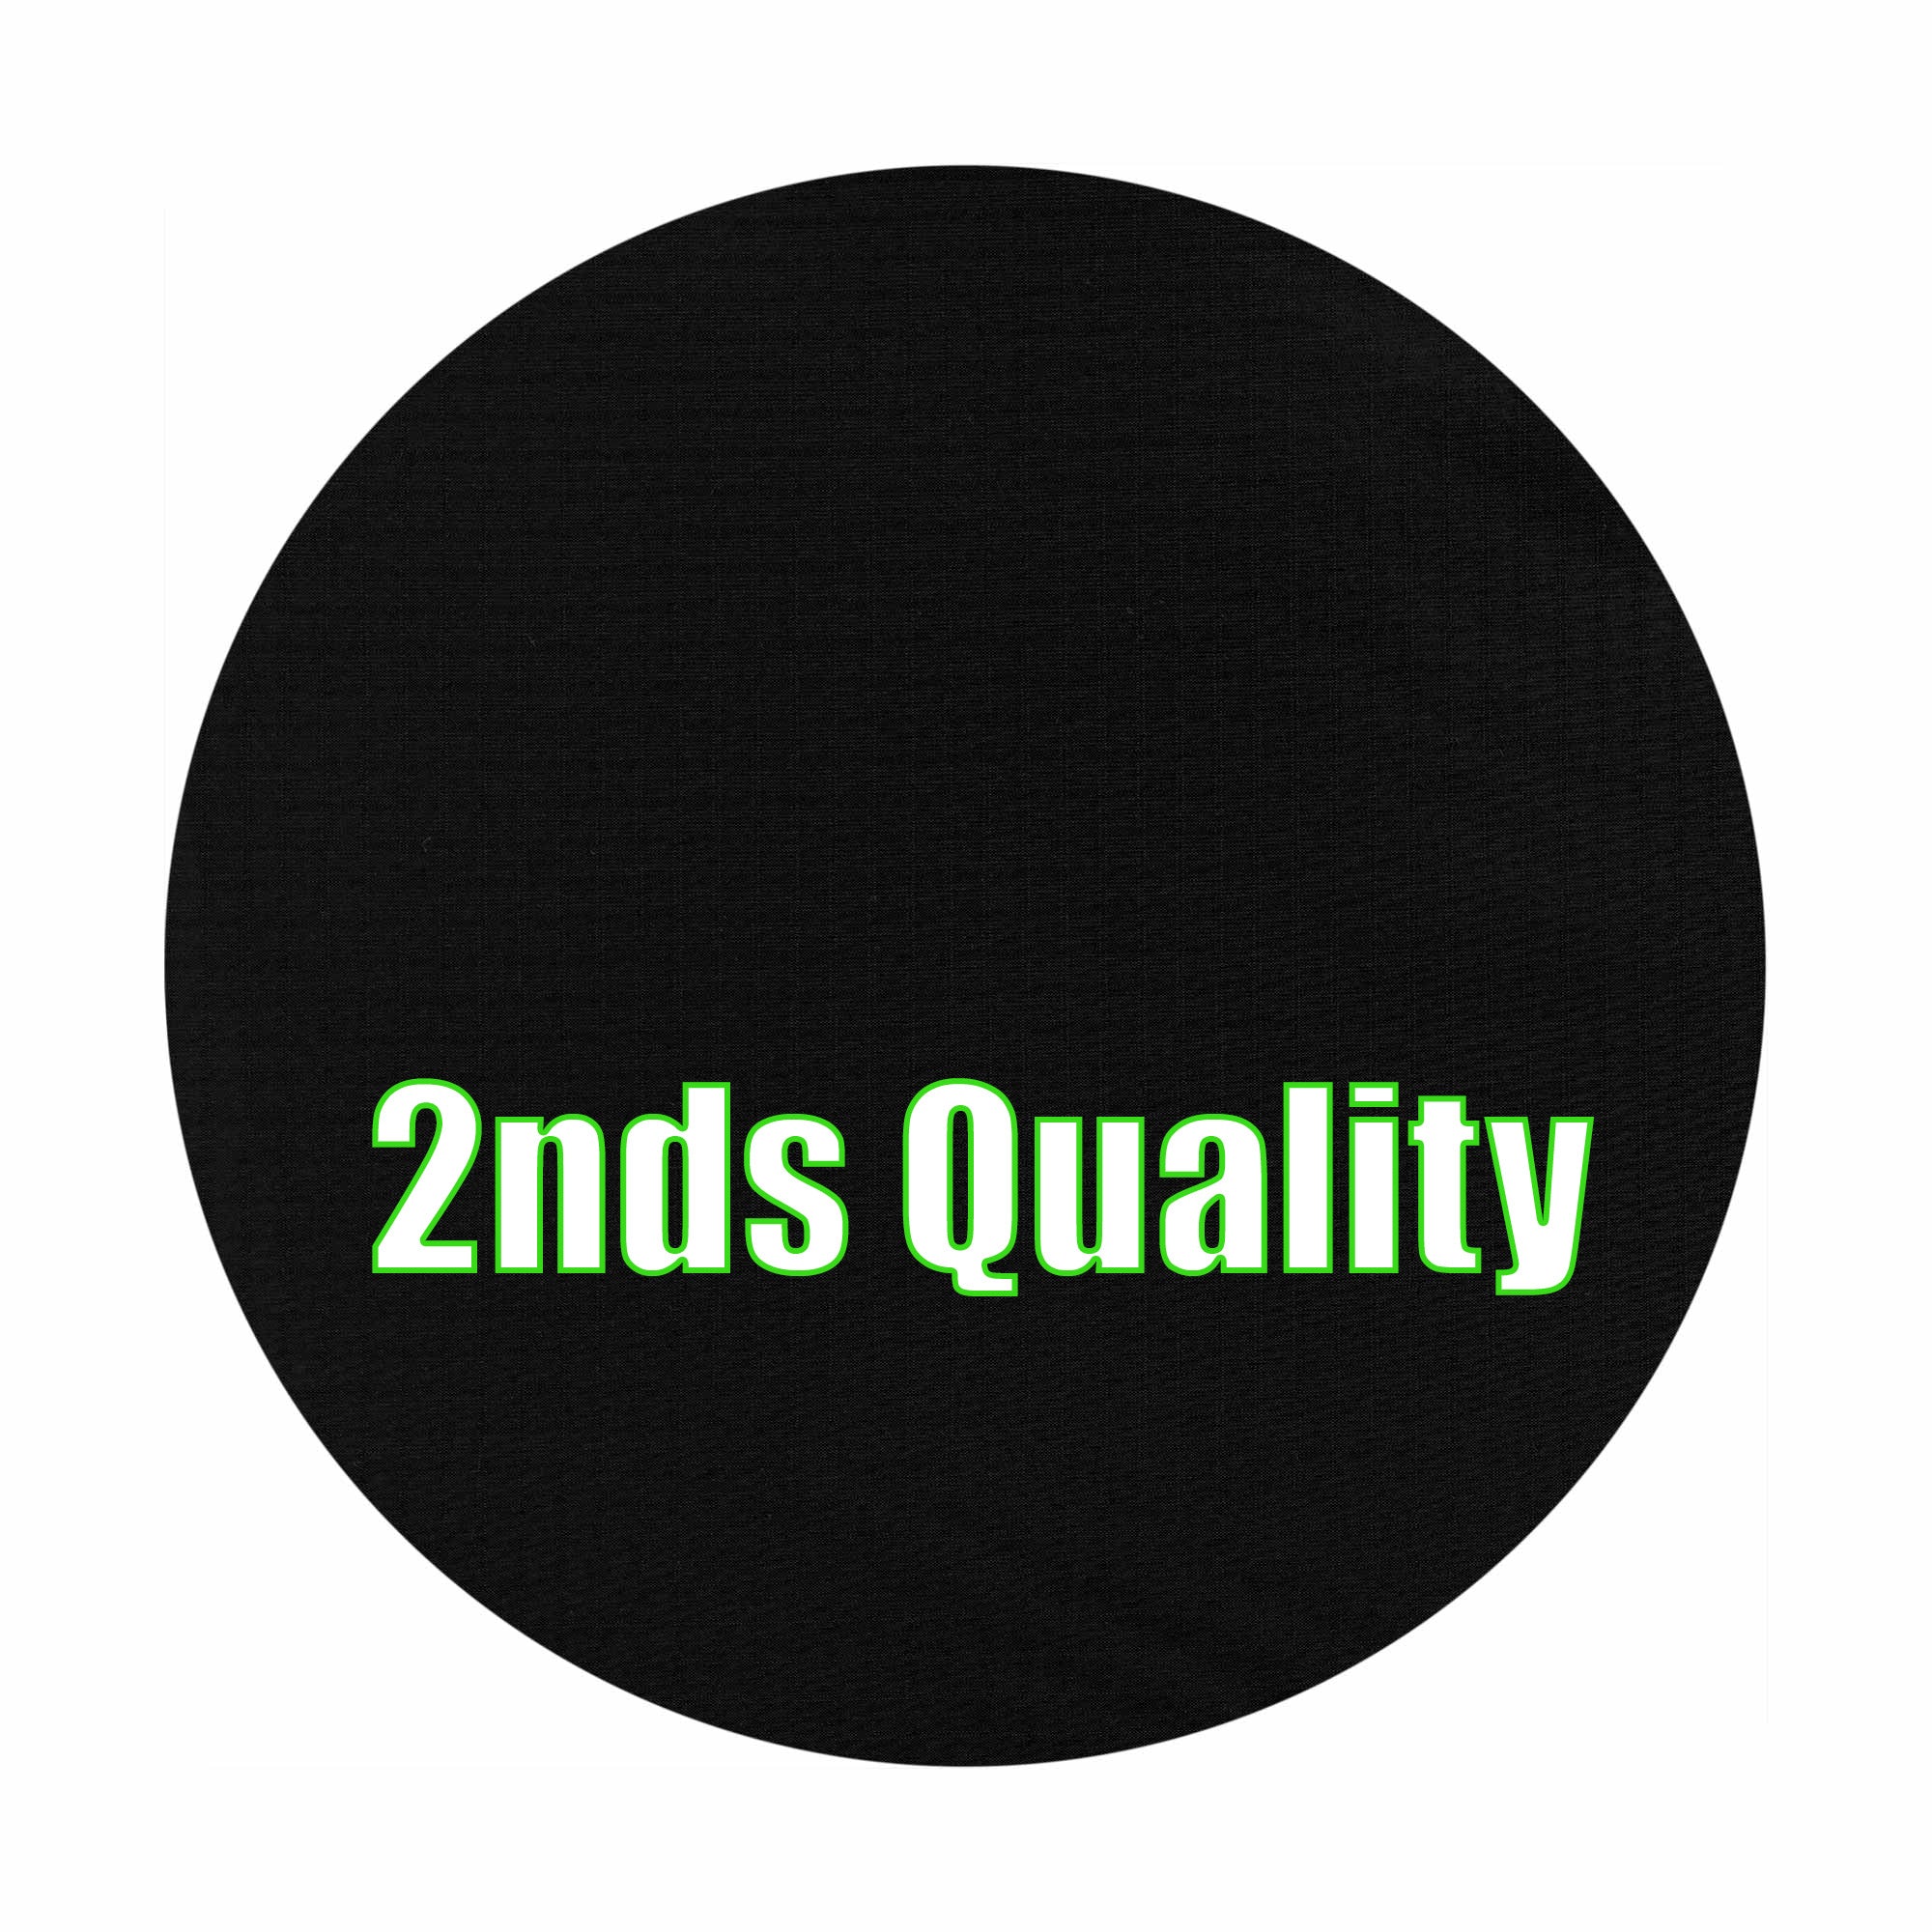 1.1 oz Silpoly - 2nds Quality